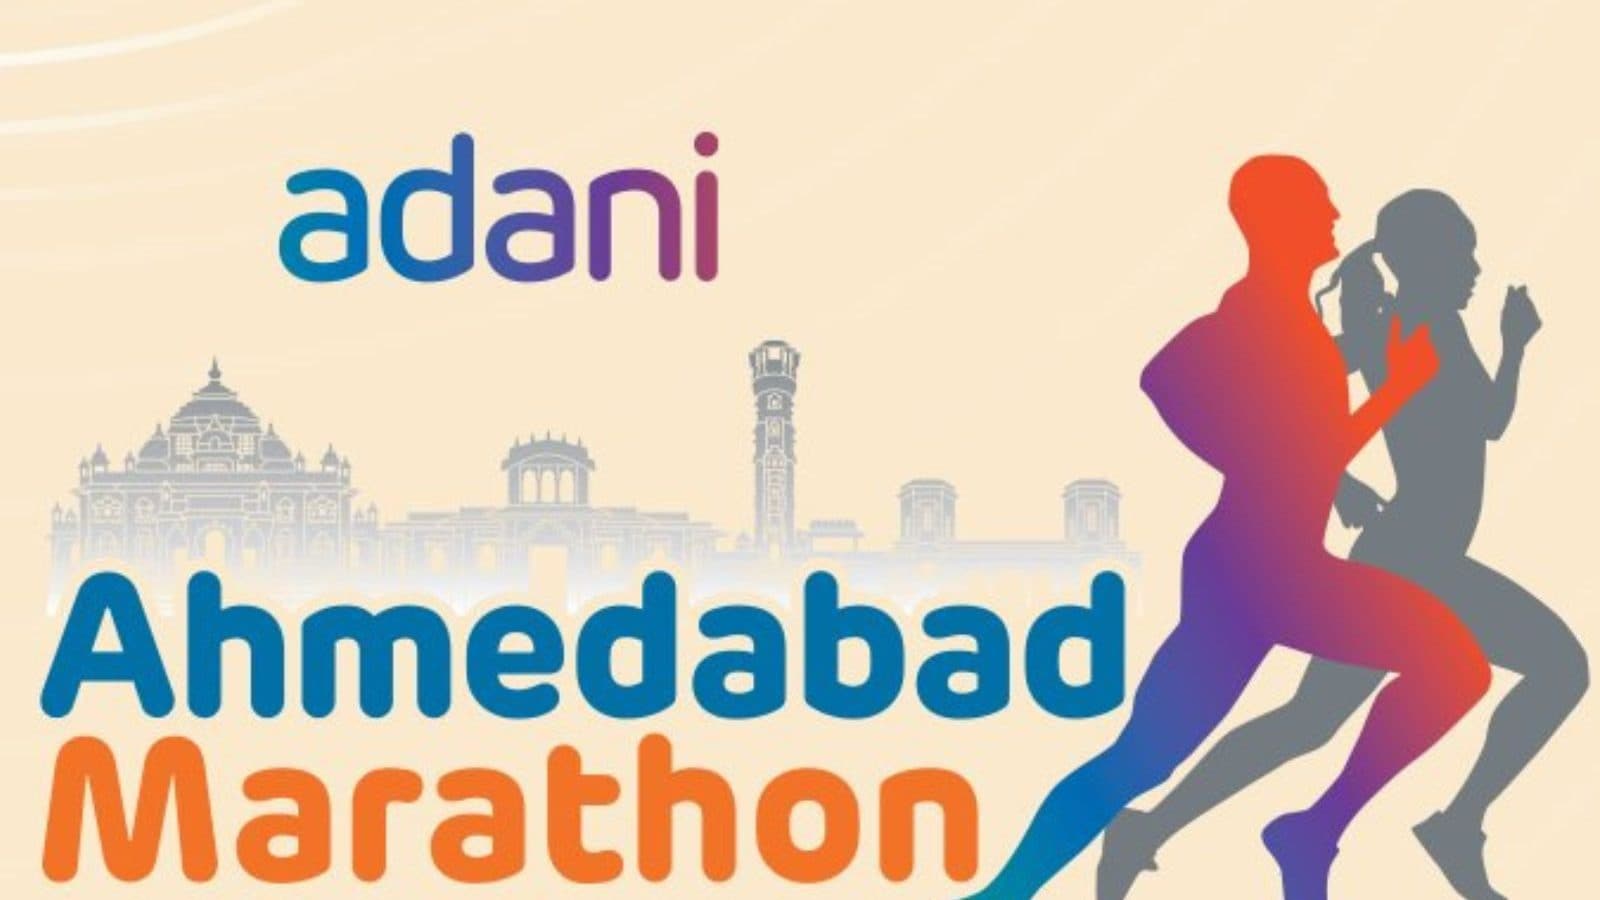 Adani Ahmedabad Marathon returns for its sixth edition to encourage